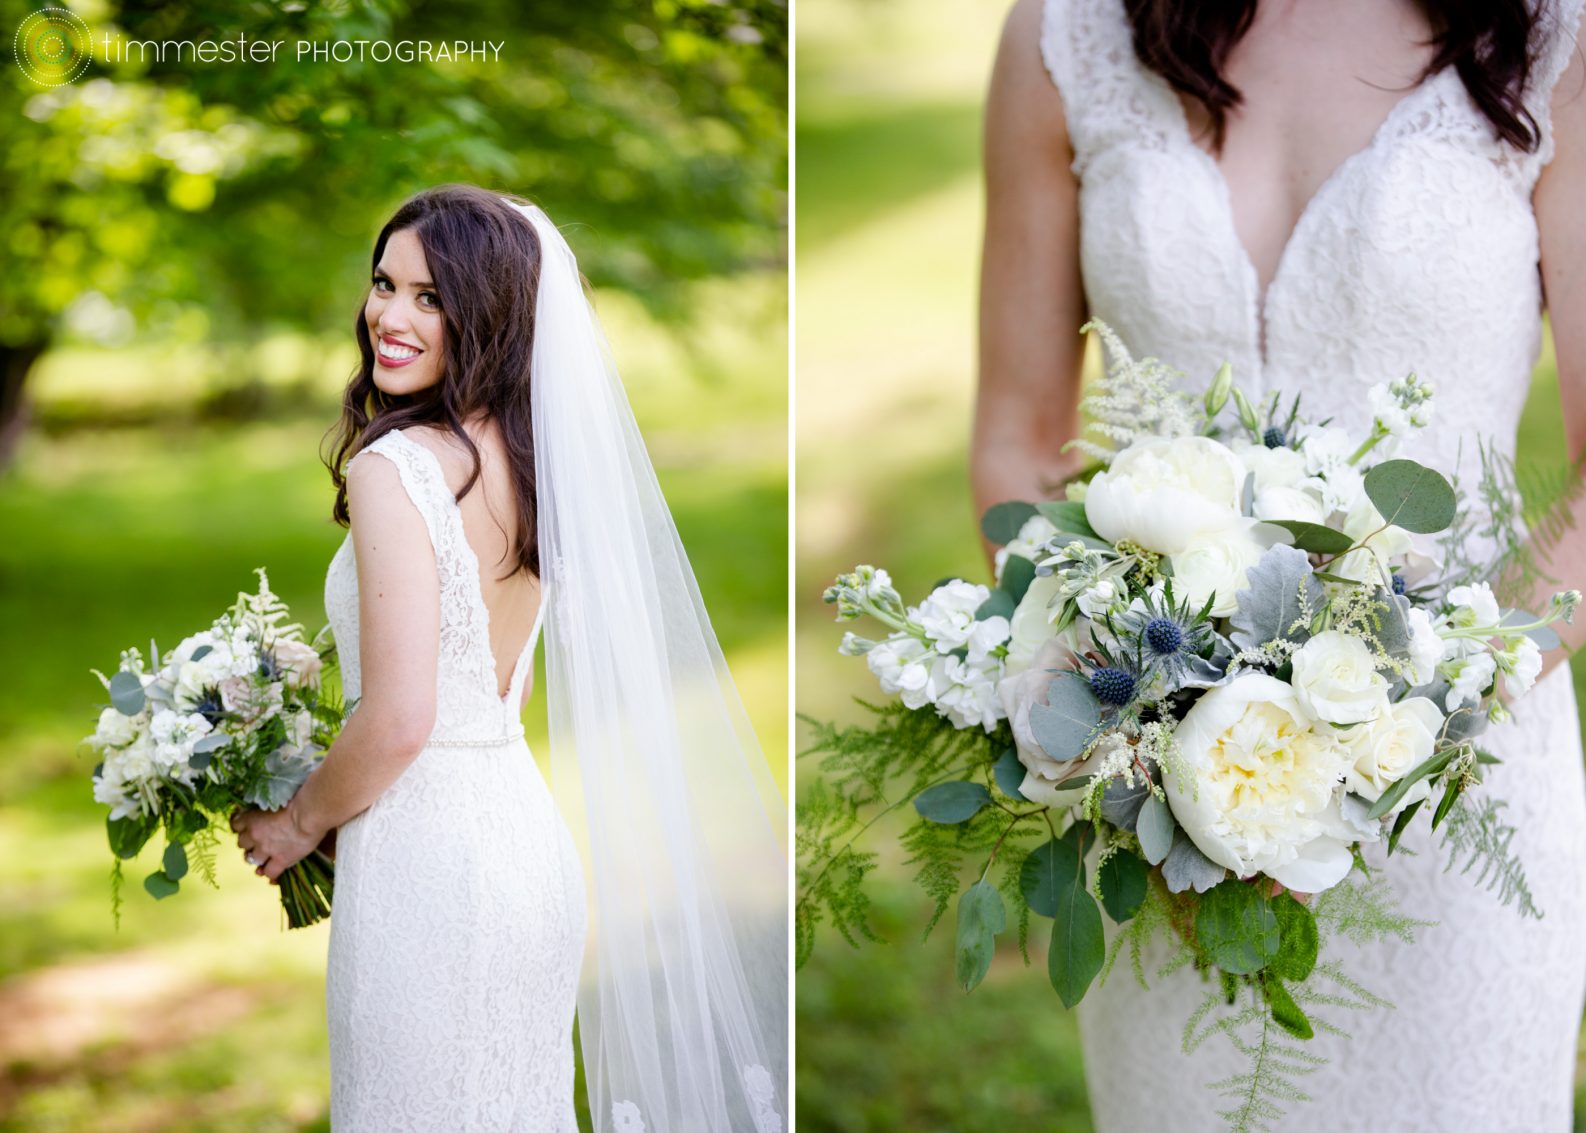 Stunning bride, Chloe, on her wedding day at Barn at Valhalla in Chapel Hill, North Carolina.